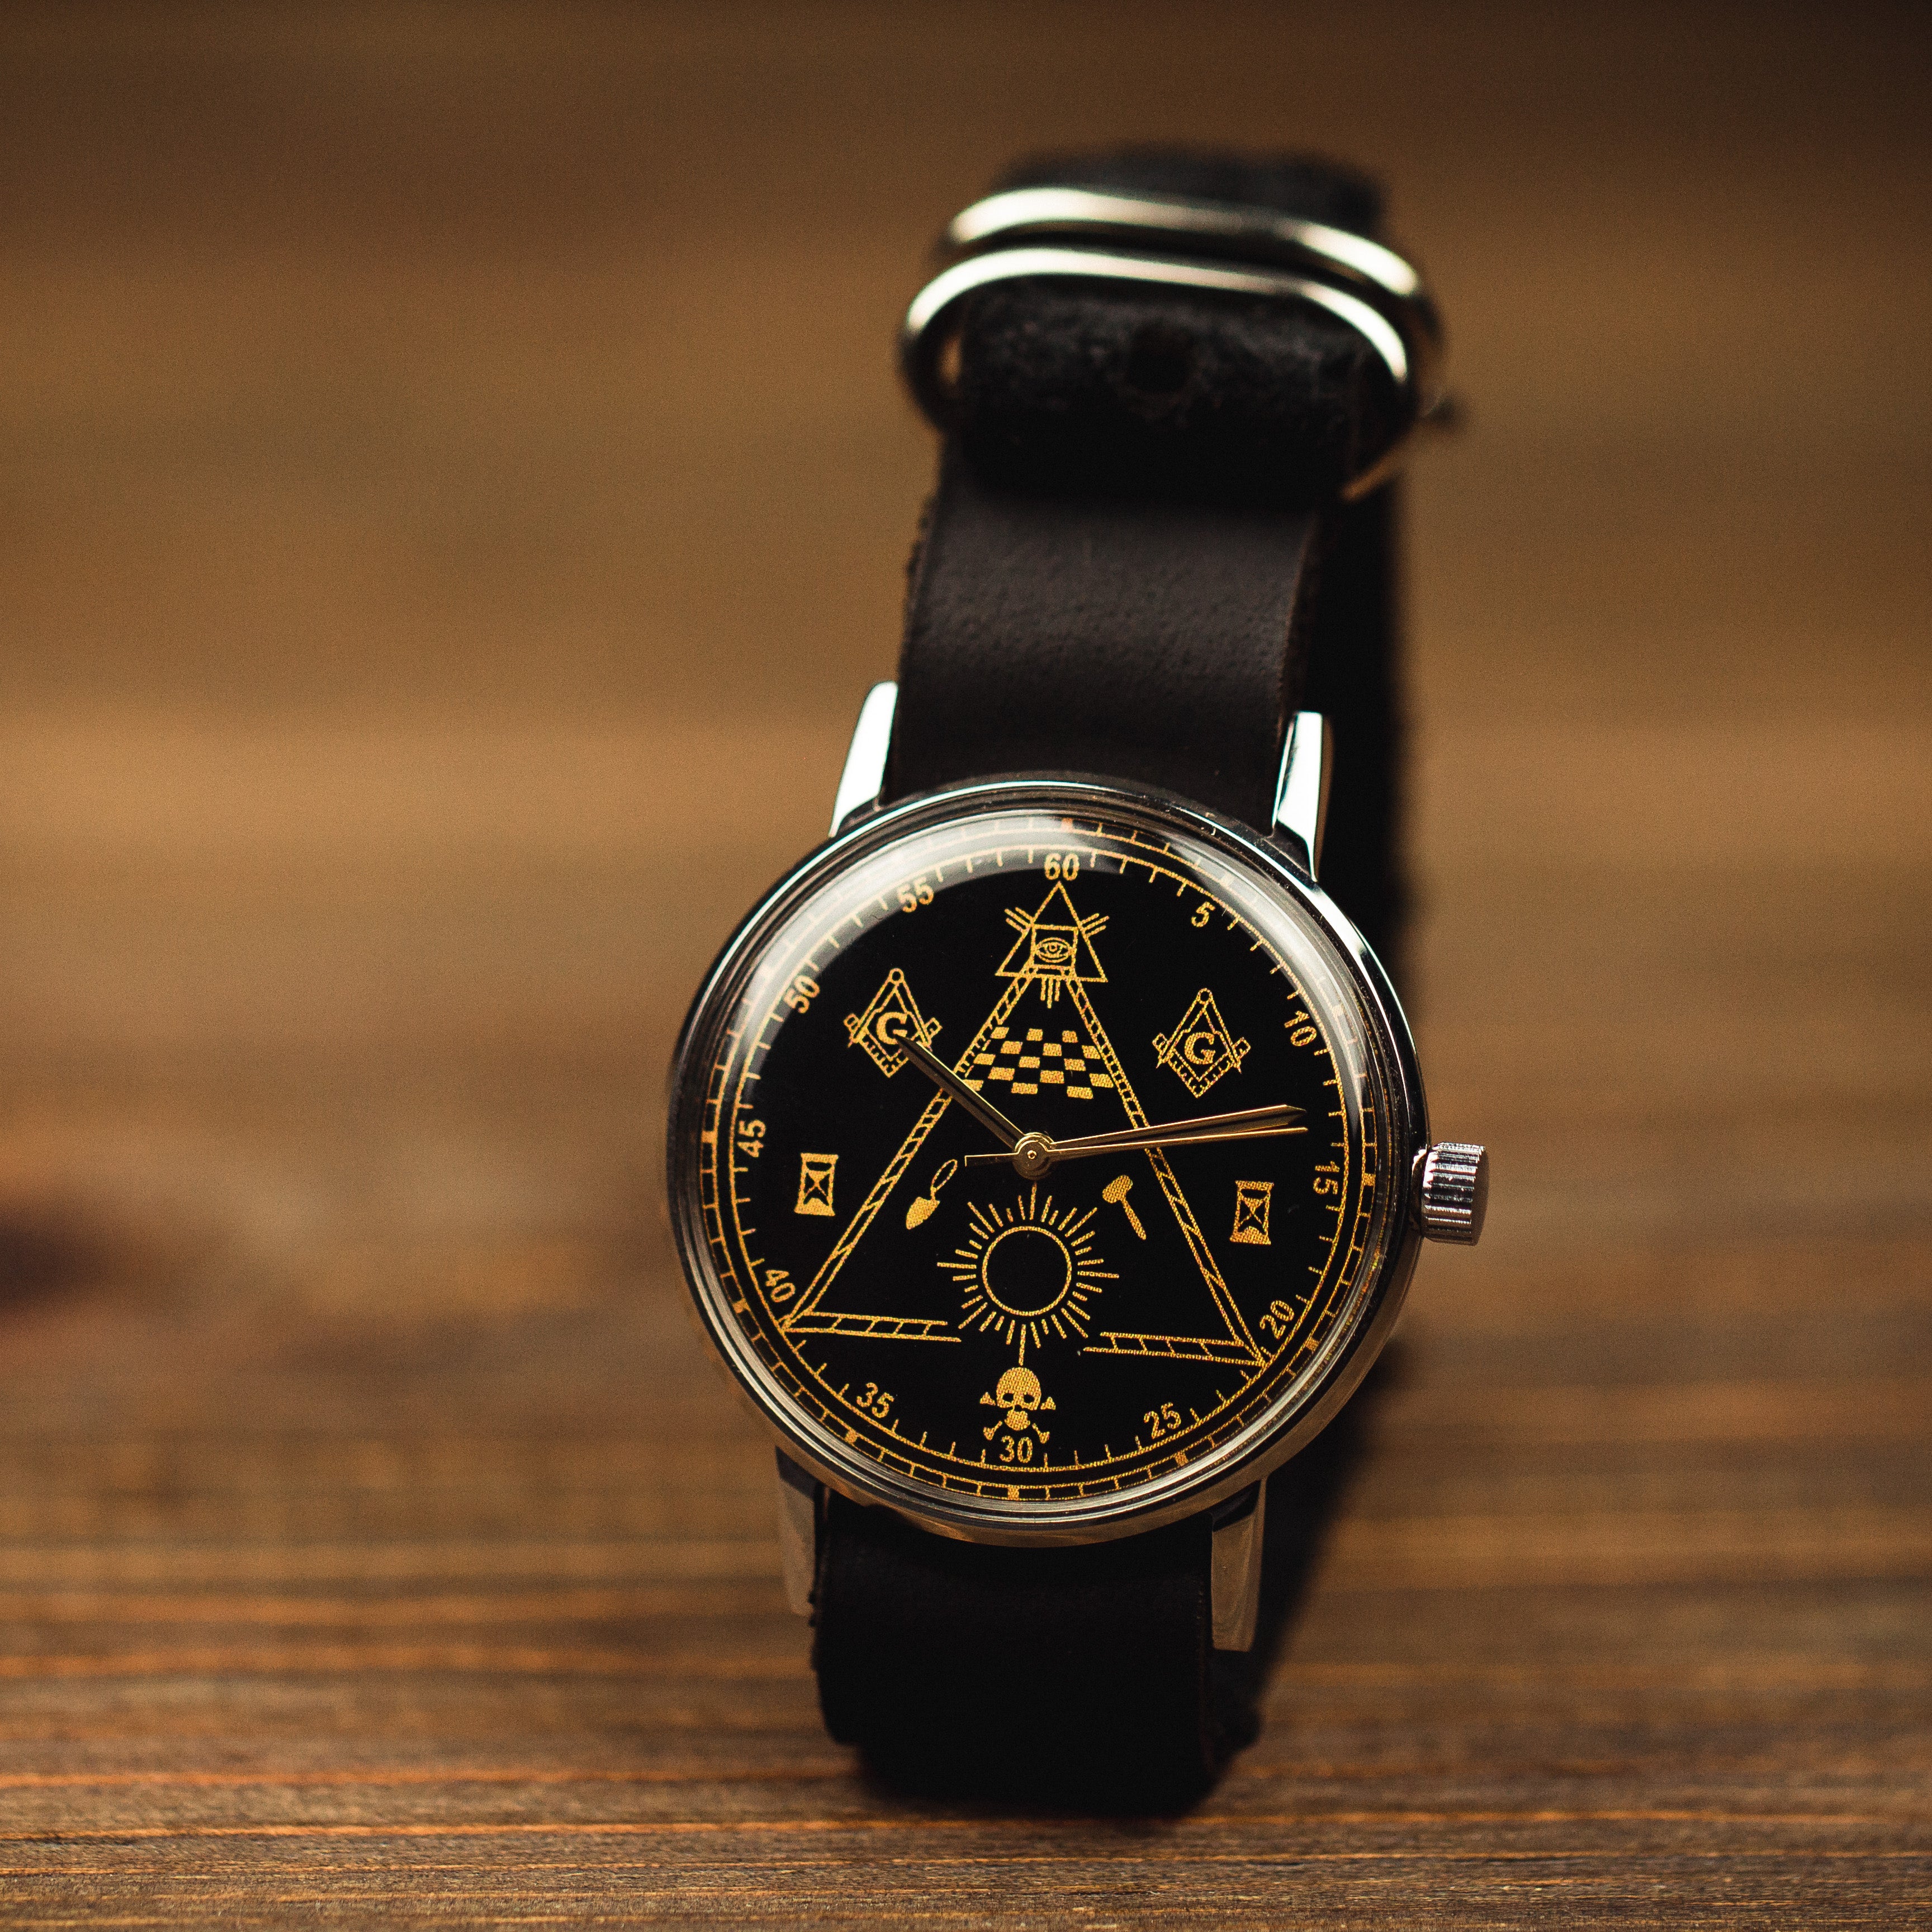 Soviet very rare vintage wrist watch for men Poljot with leather nato strap